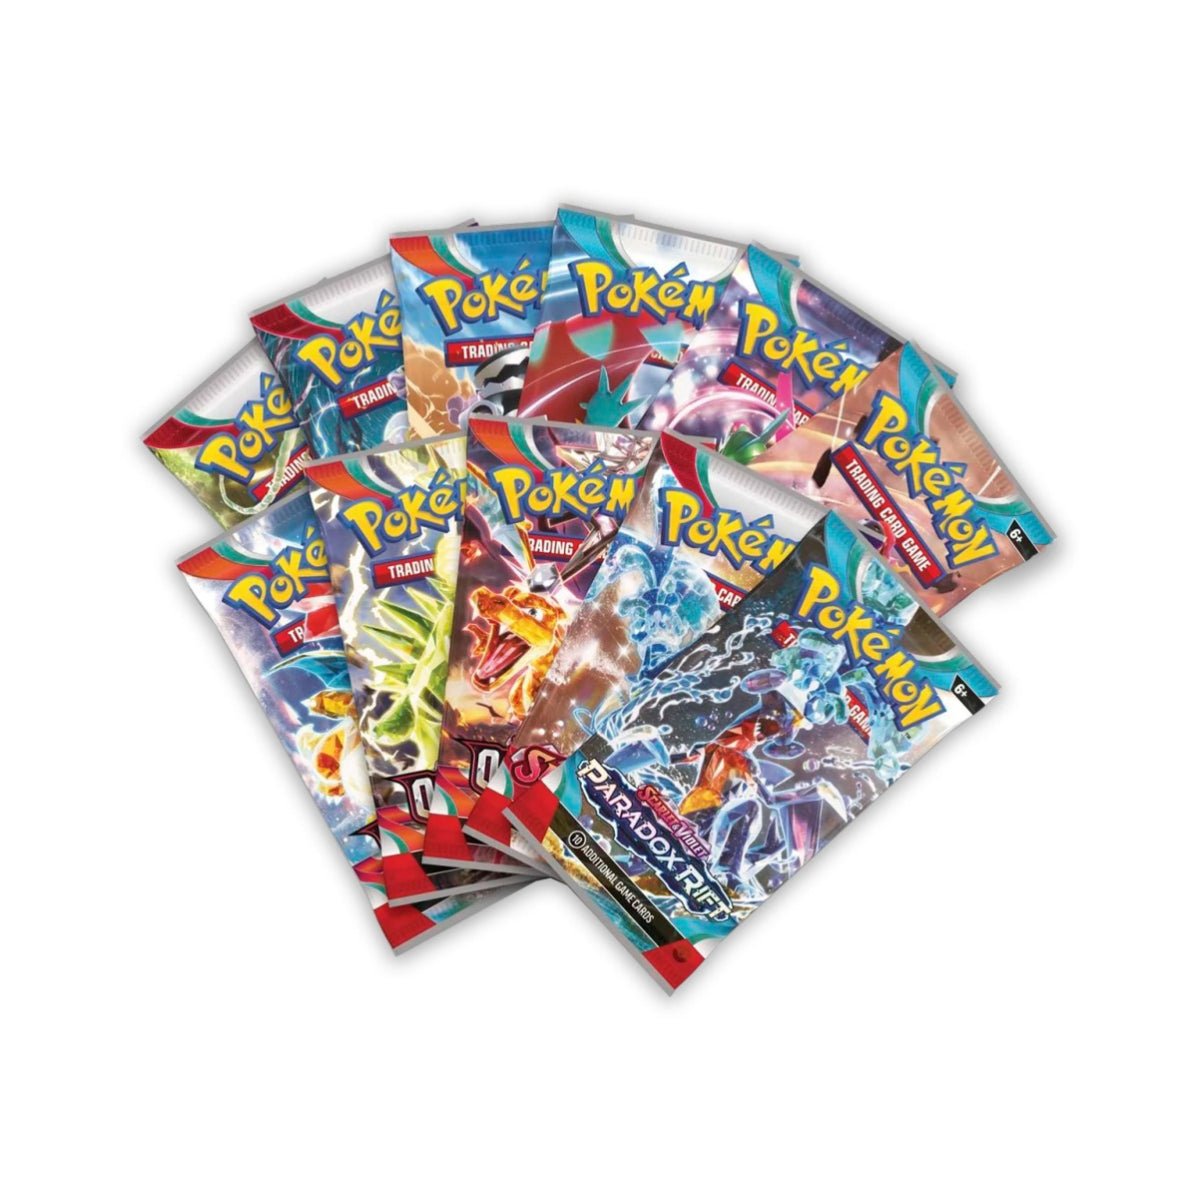 Pokémon TCG: Combined Powers Premium Collection - GameOn.games